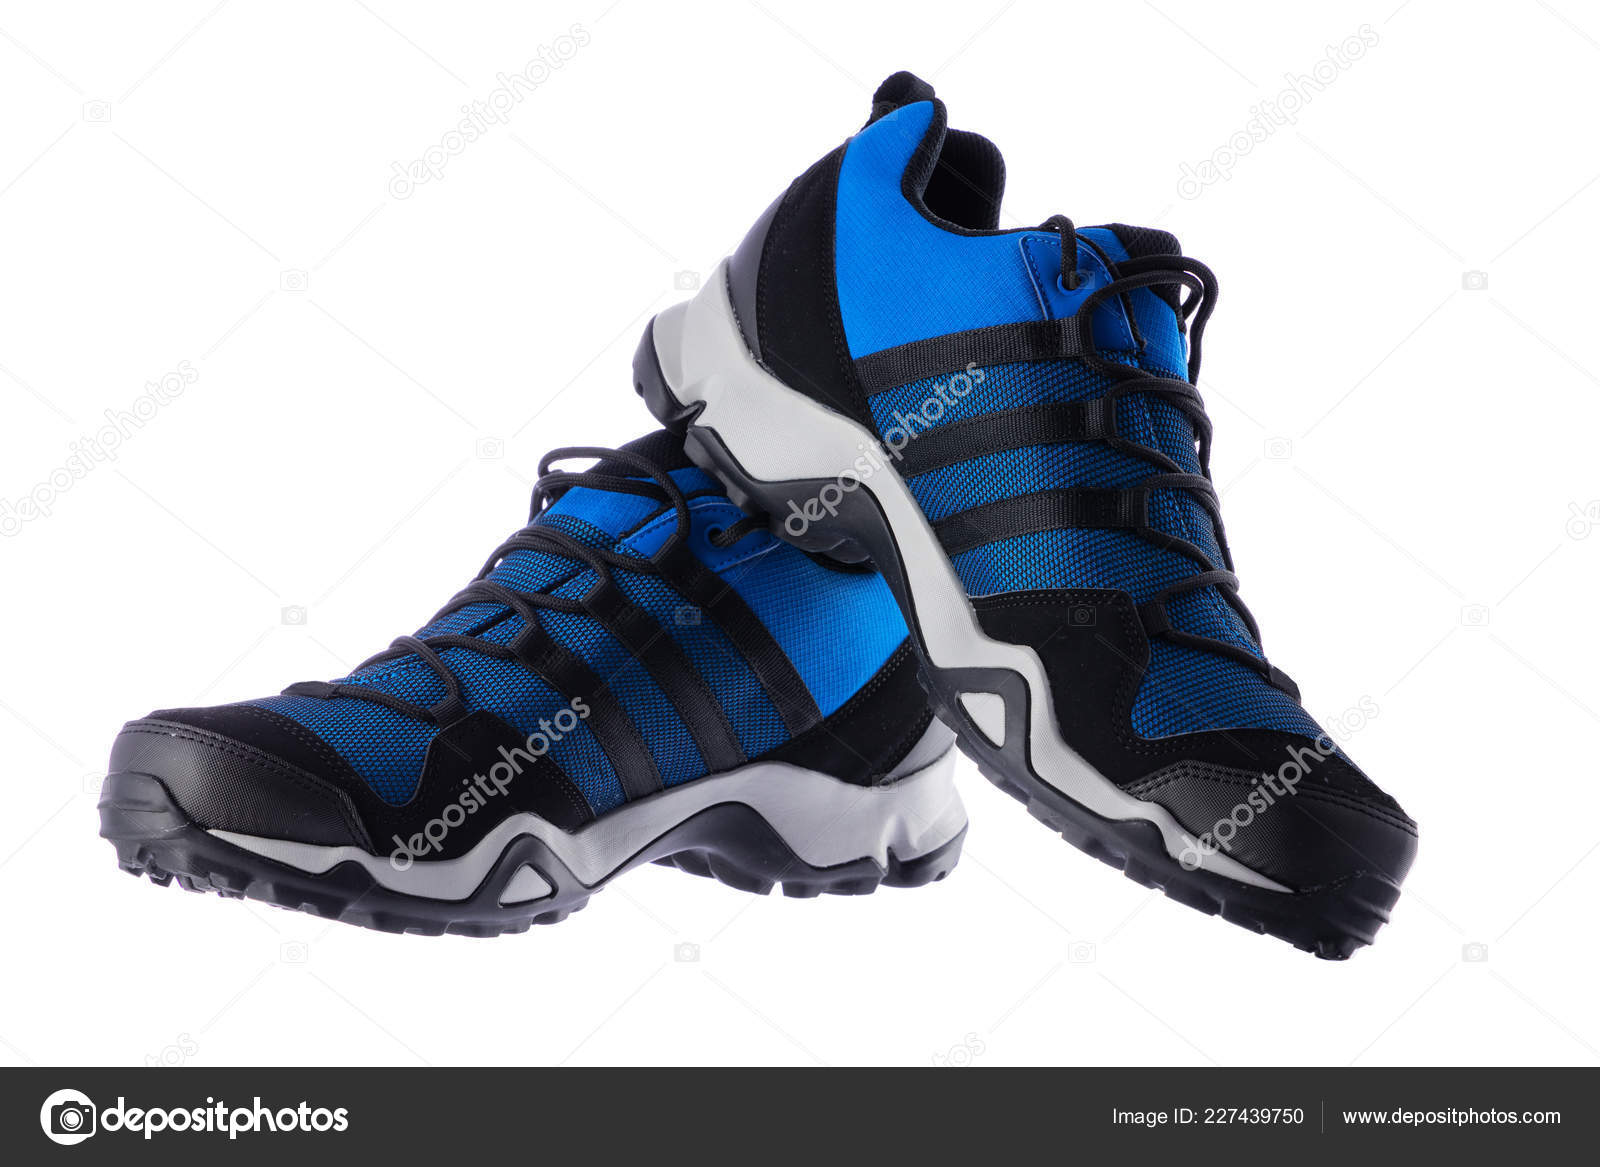 waterproof sports shoes for men